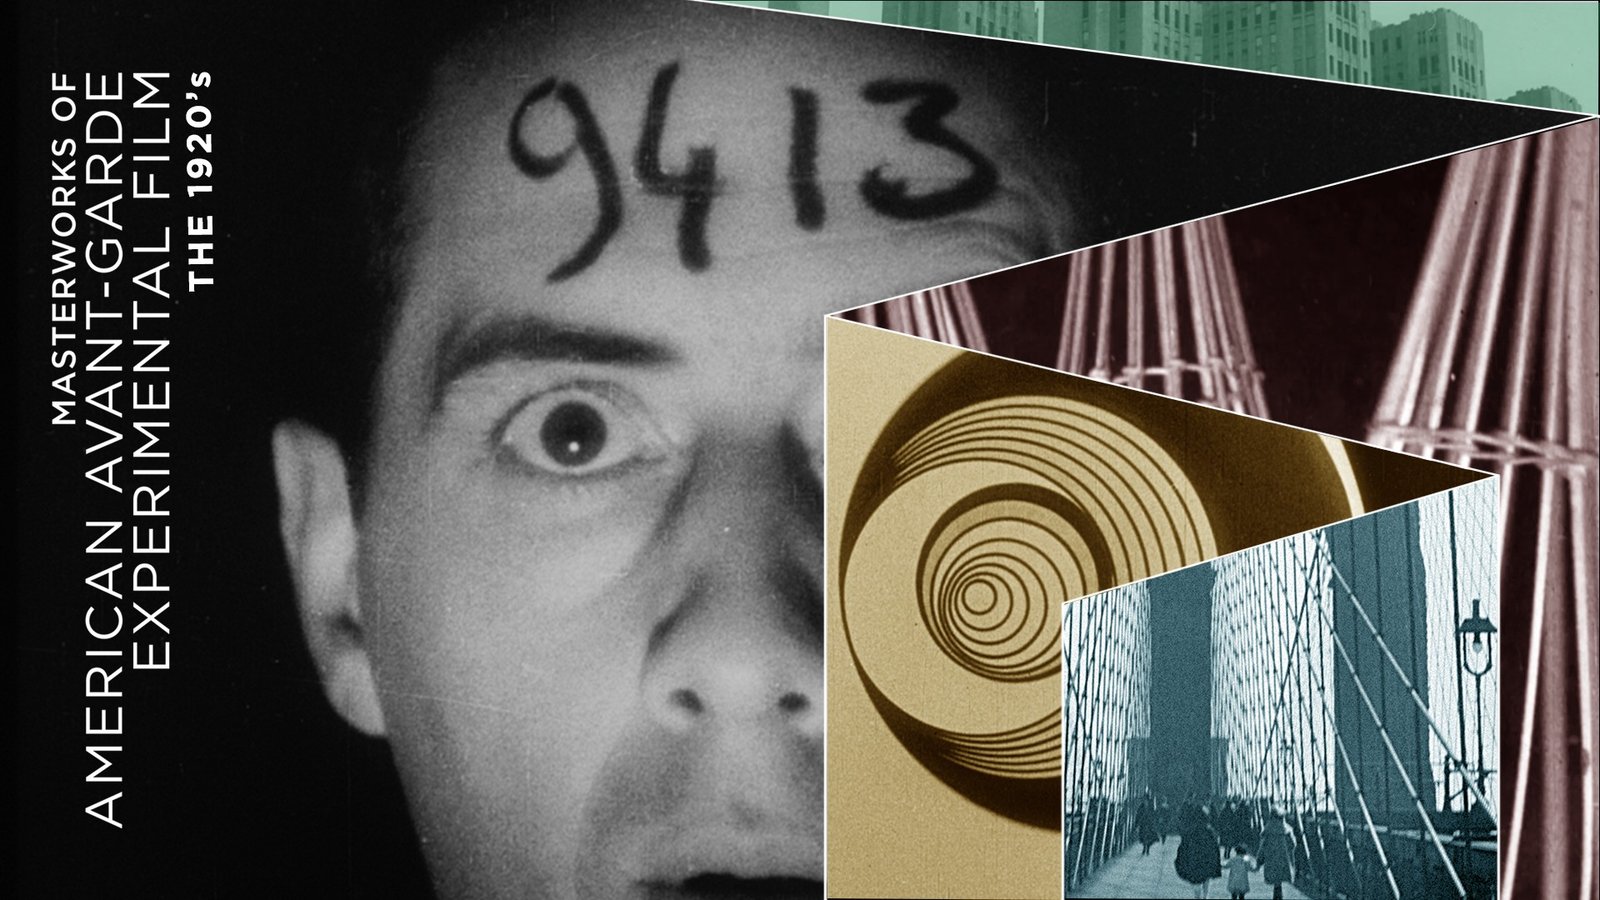 Masterworks of American Avant-garde Experimental Film - The 1920s